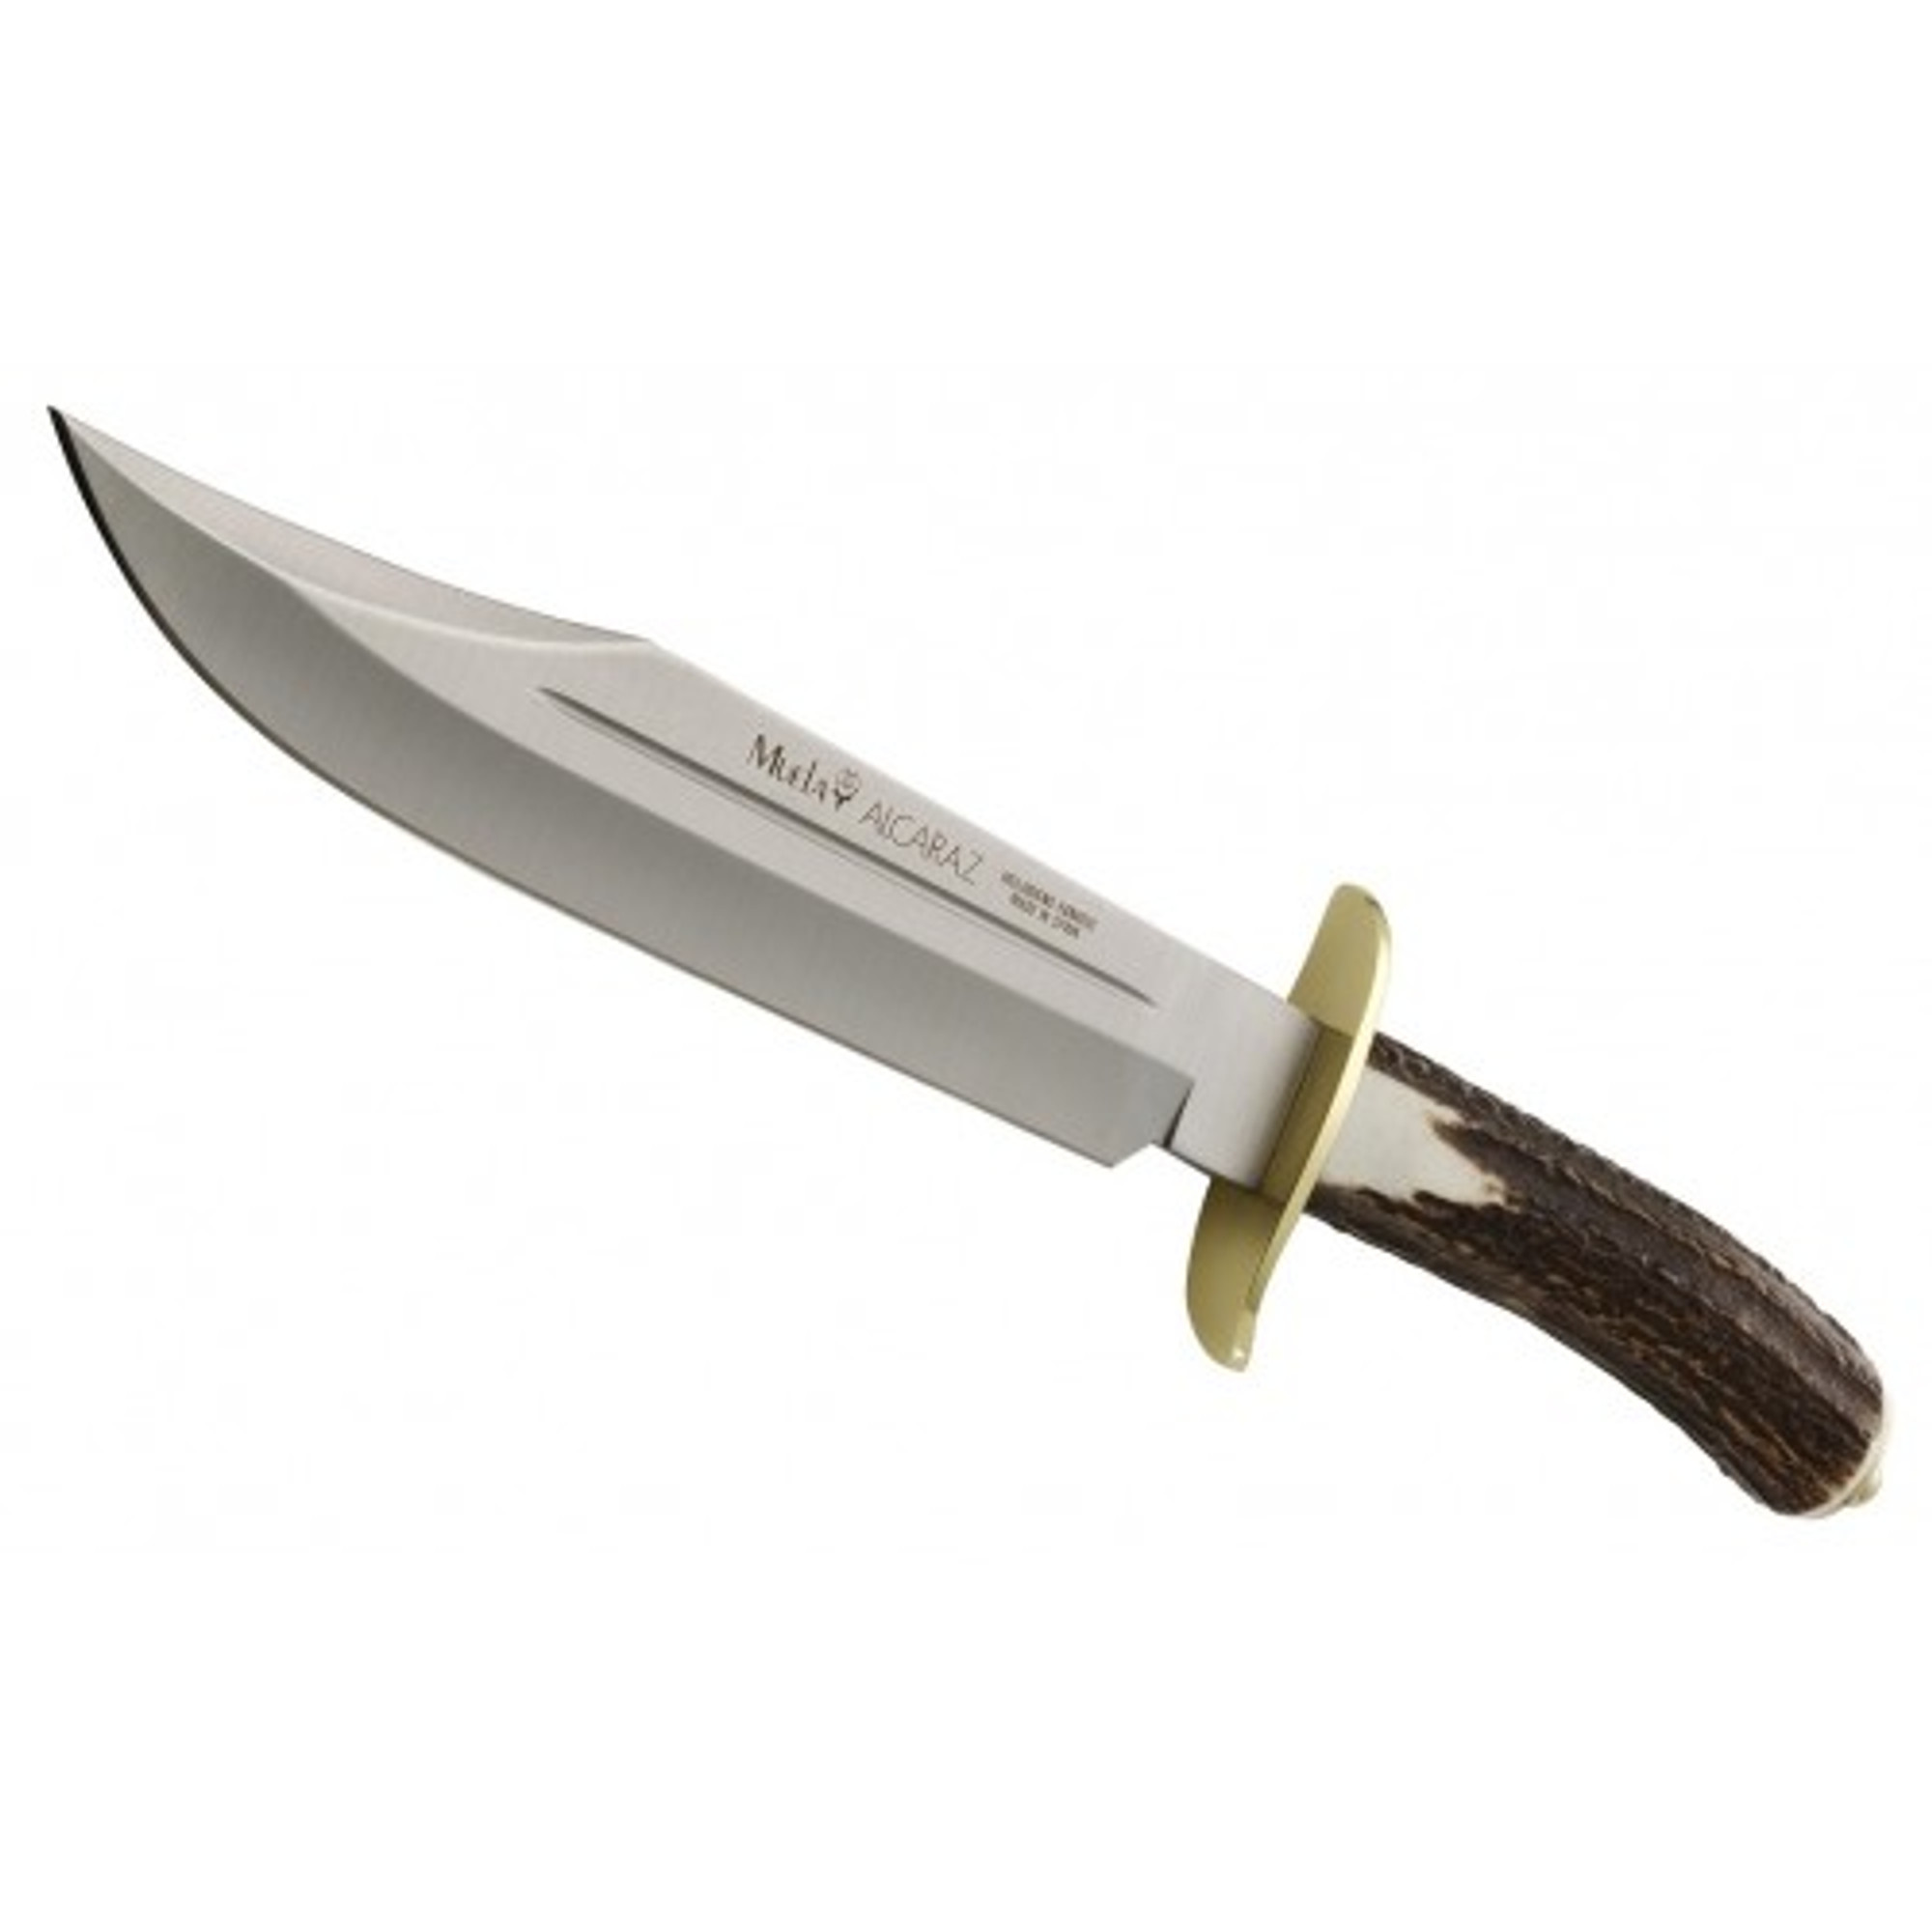 MUELA ALCARAZ-22, X50CrMoV15, 8-5/8" Fixed Blade Hunting Knife, Deer Horn Handle